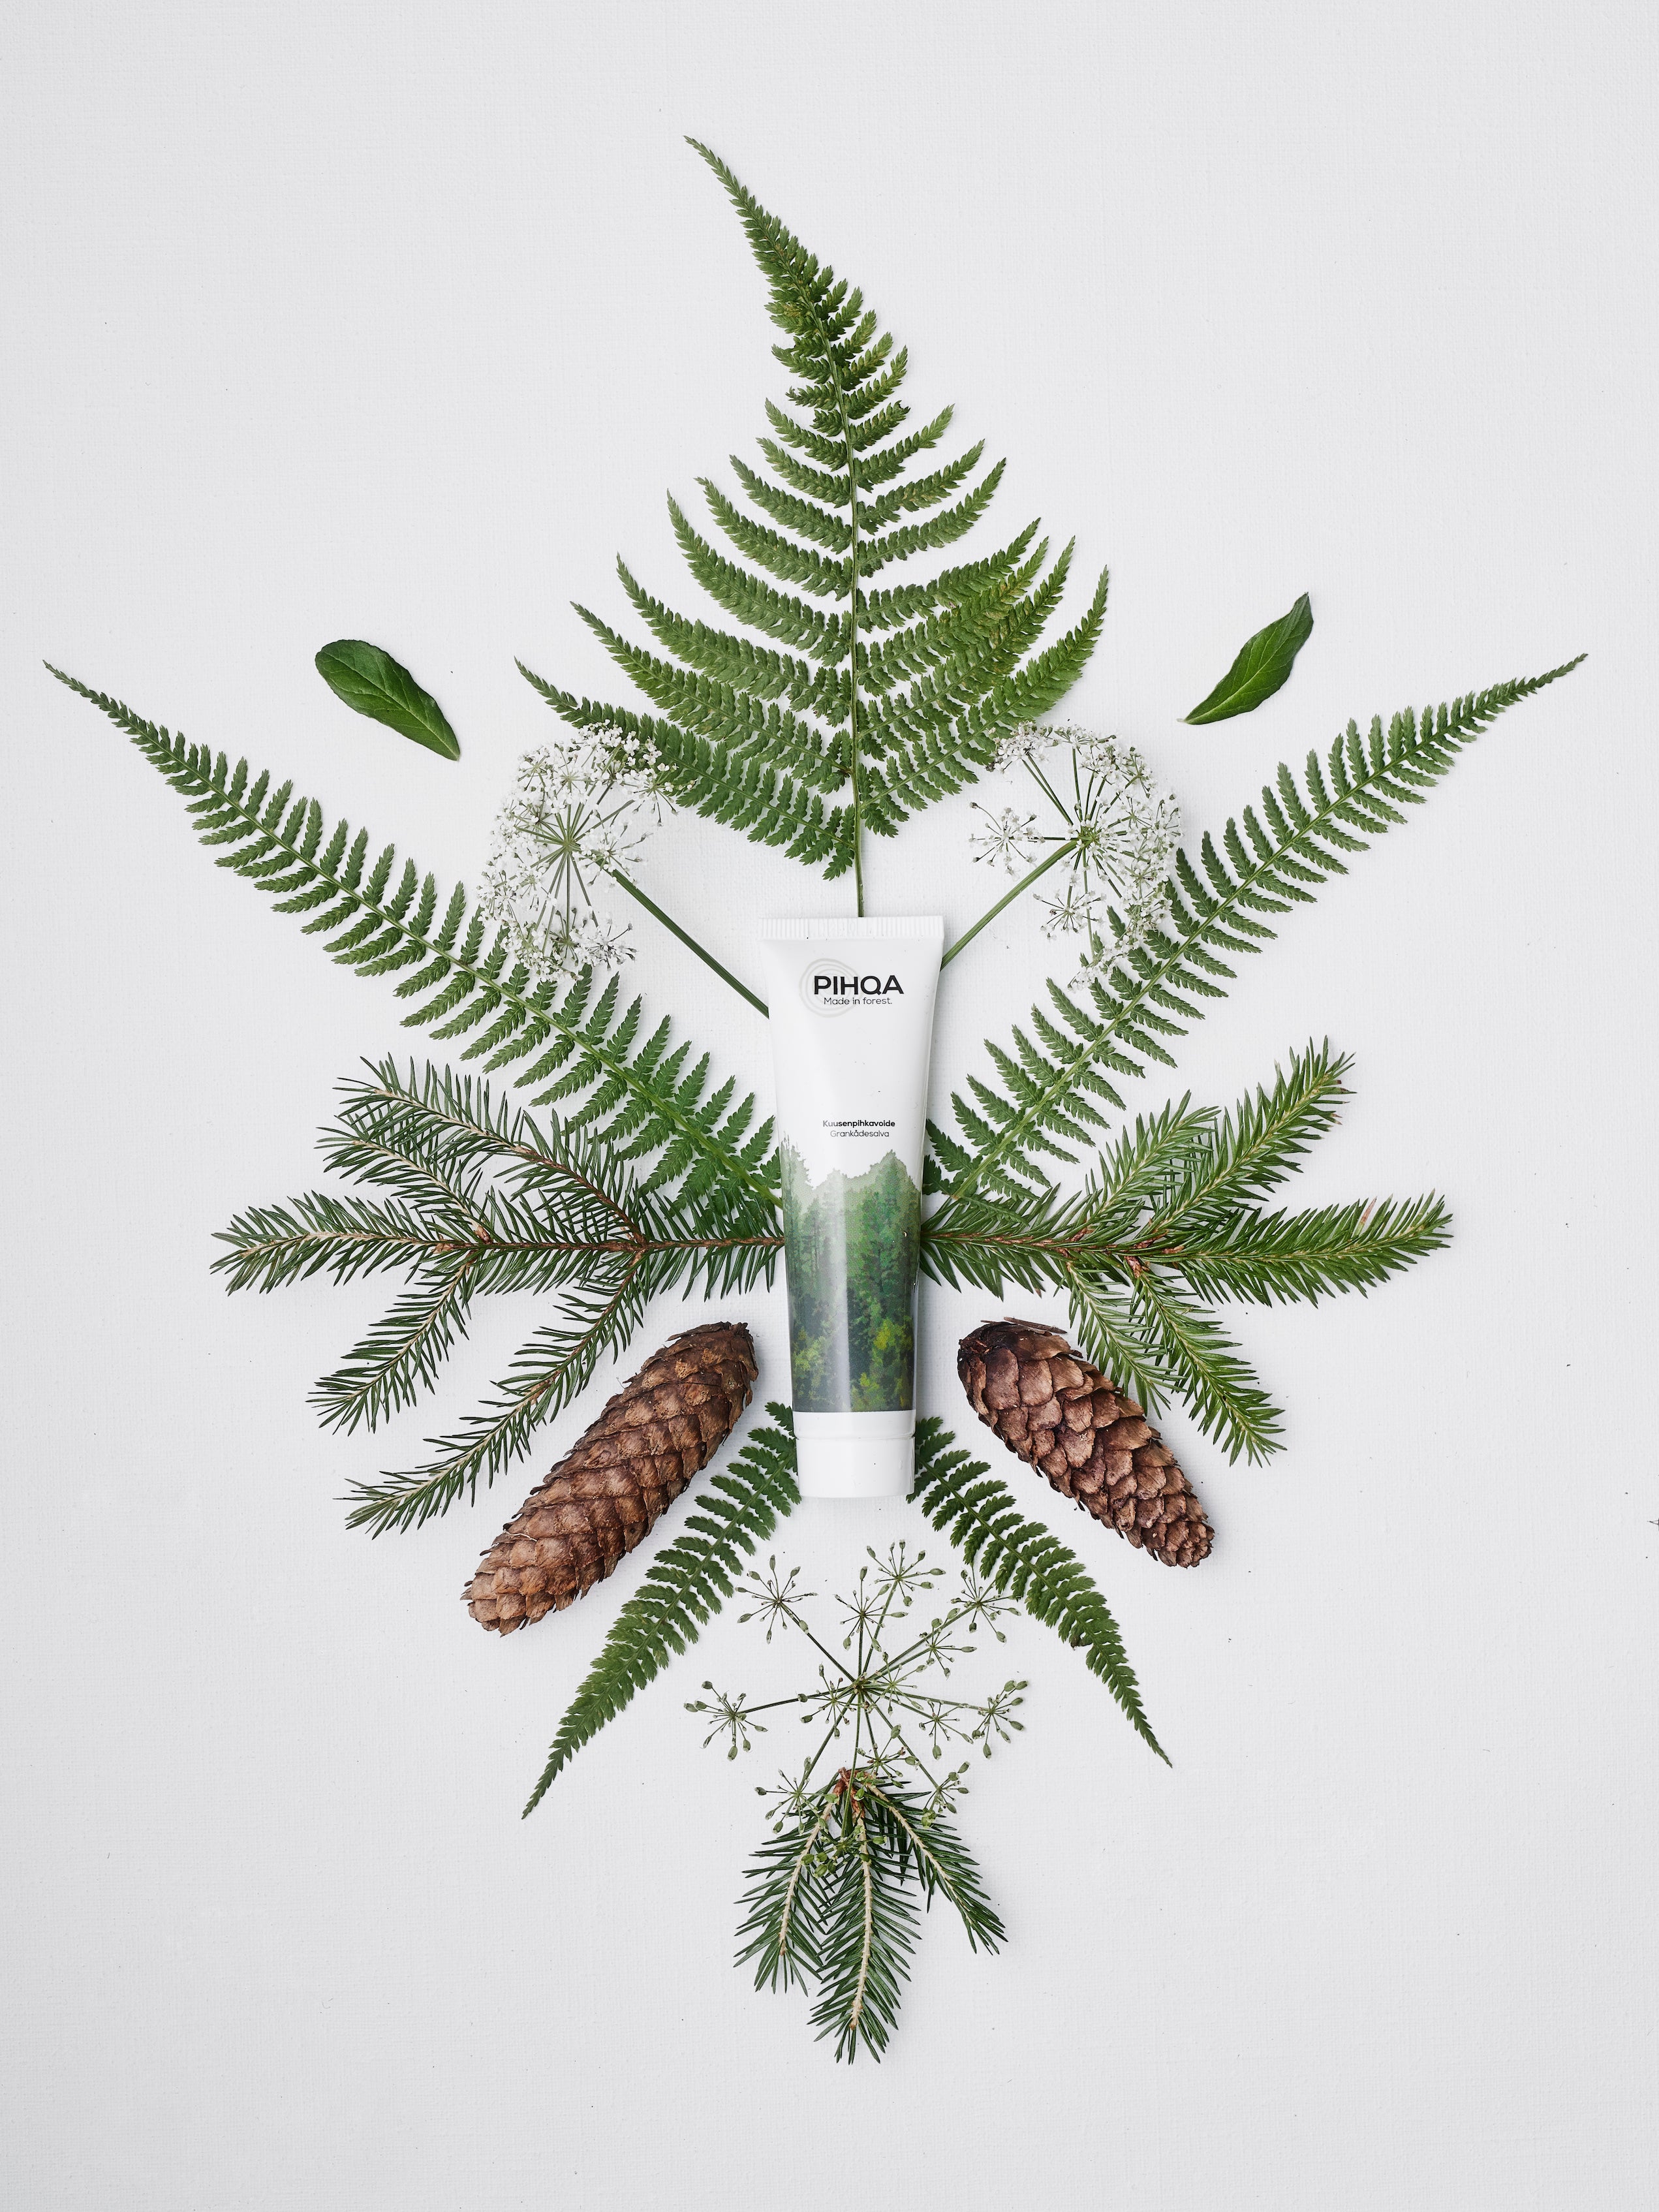 PIHQA - natural Finnish spruce tree resin balm